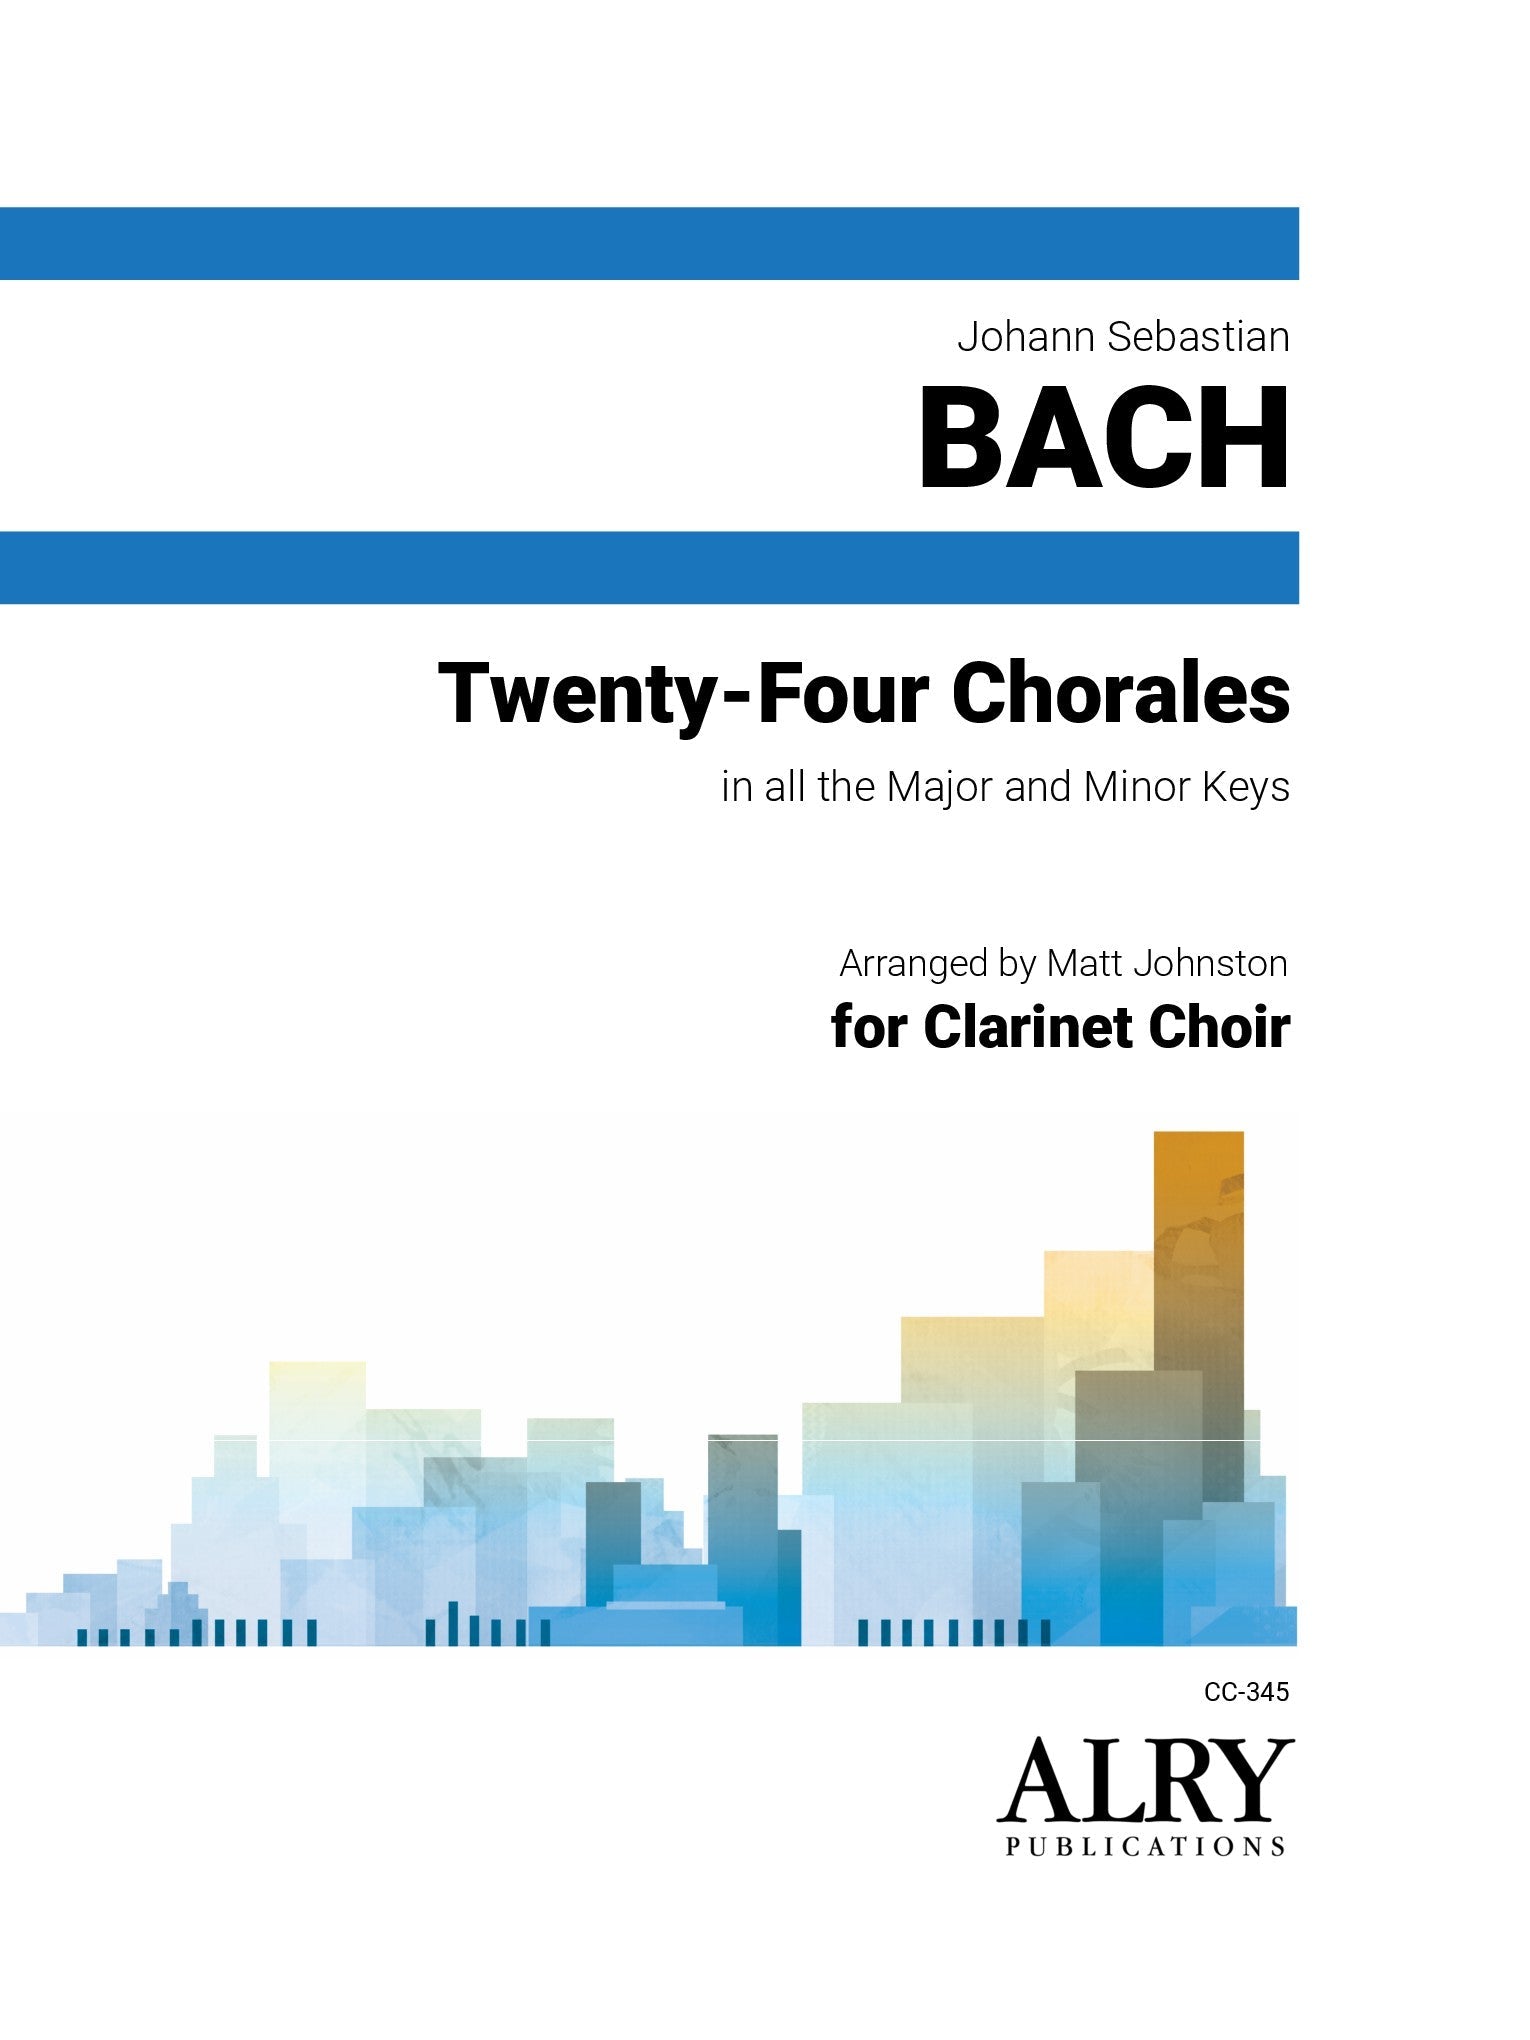 Bach (arr. Matt Johnston) - Twenty-Four Chorales for Clarinet Choir